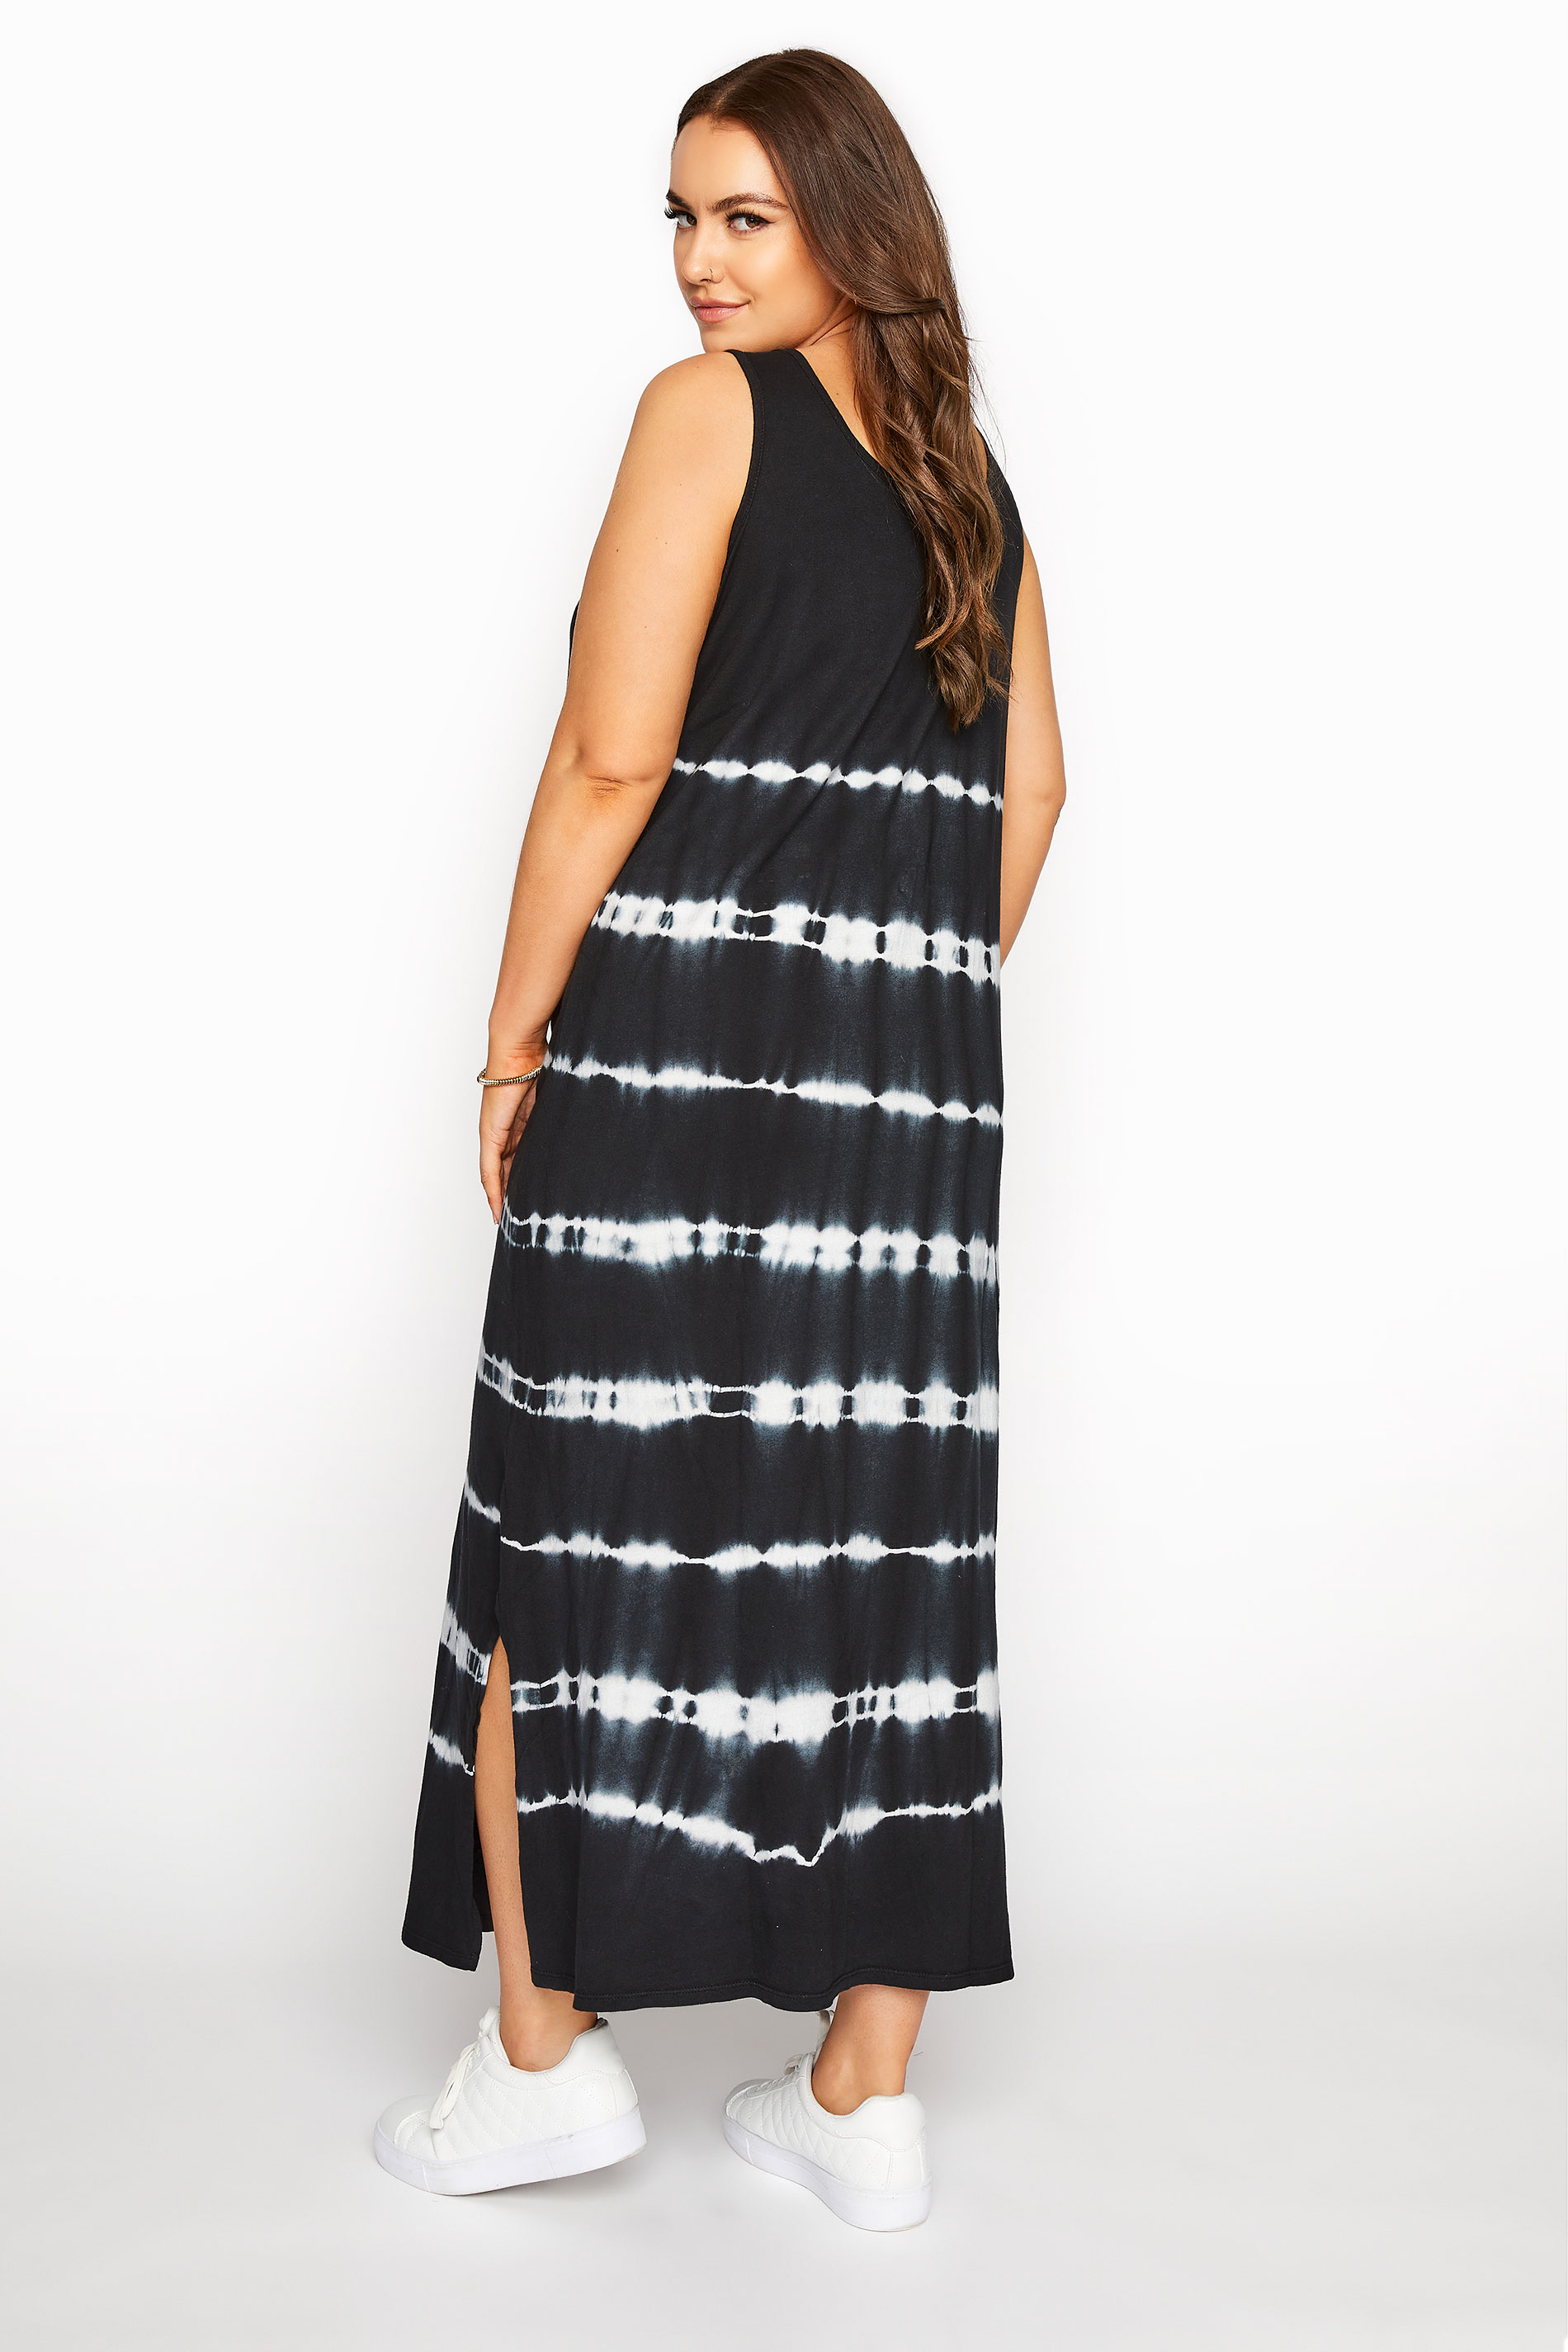 Plus Size Black Tie Dye Maxi Dress | Yours Clothing 3